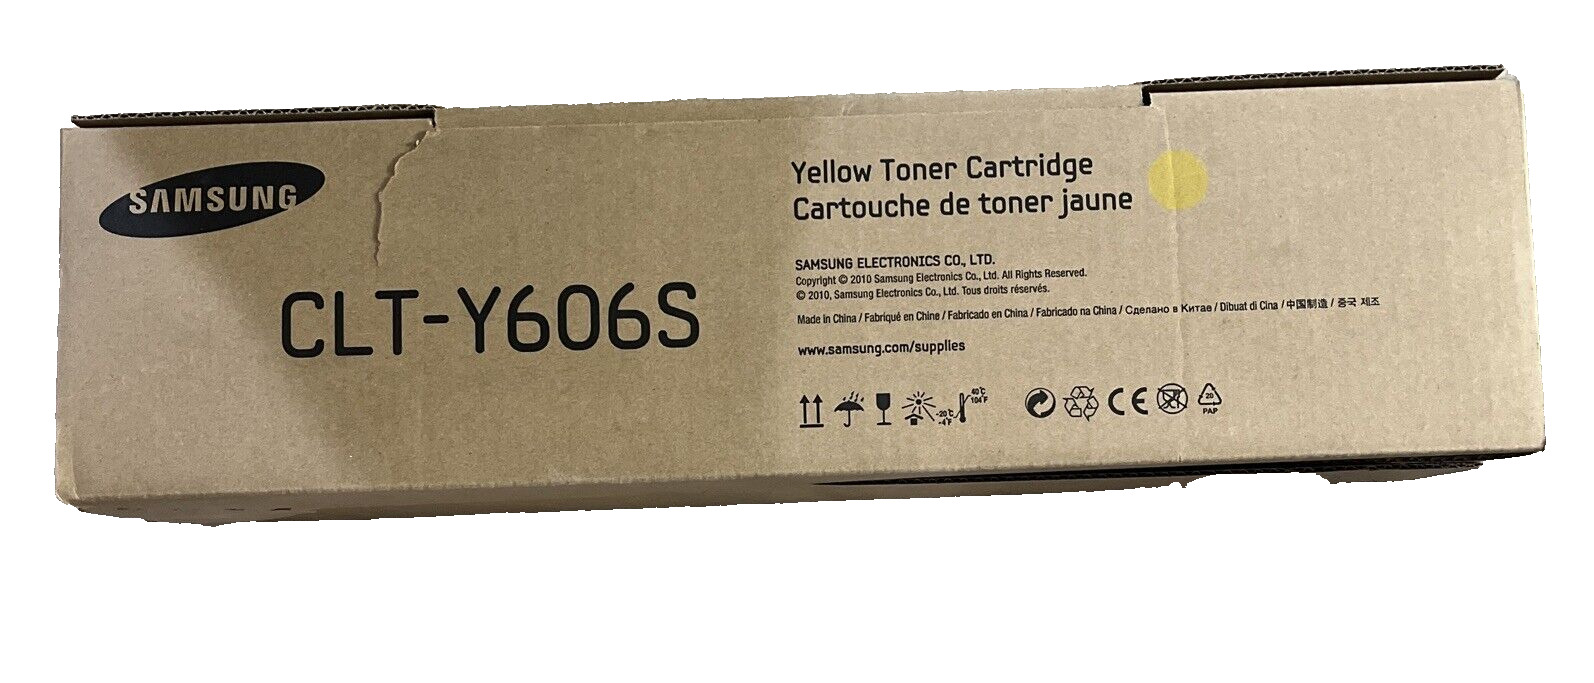 Genuine Samsung CLT-Y606S Yellow Toner Cartridge New